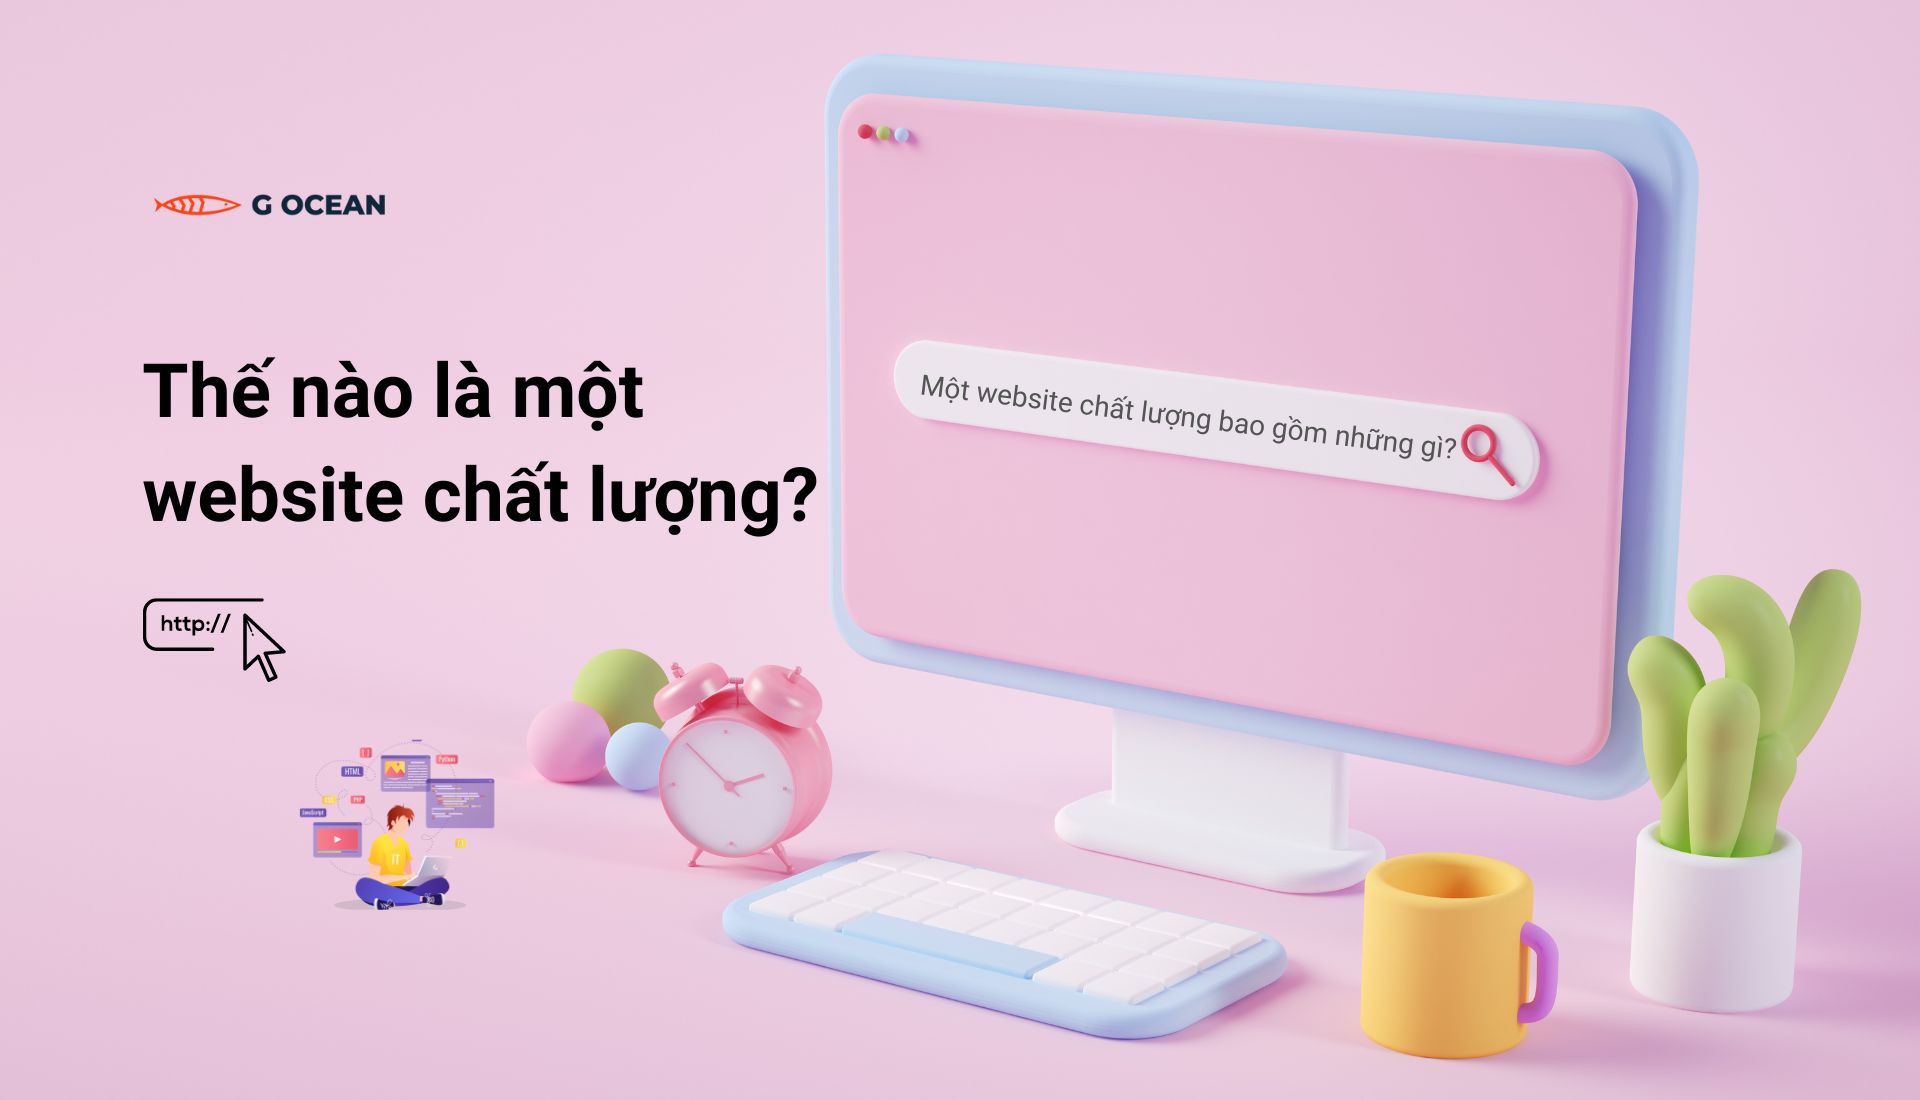 the nao la mot website chat luong